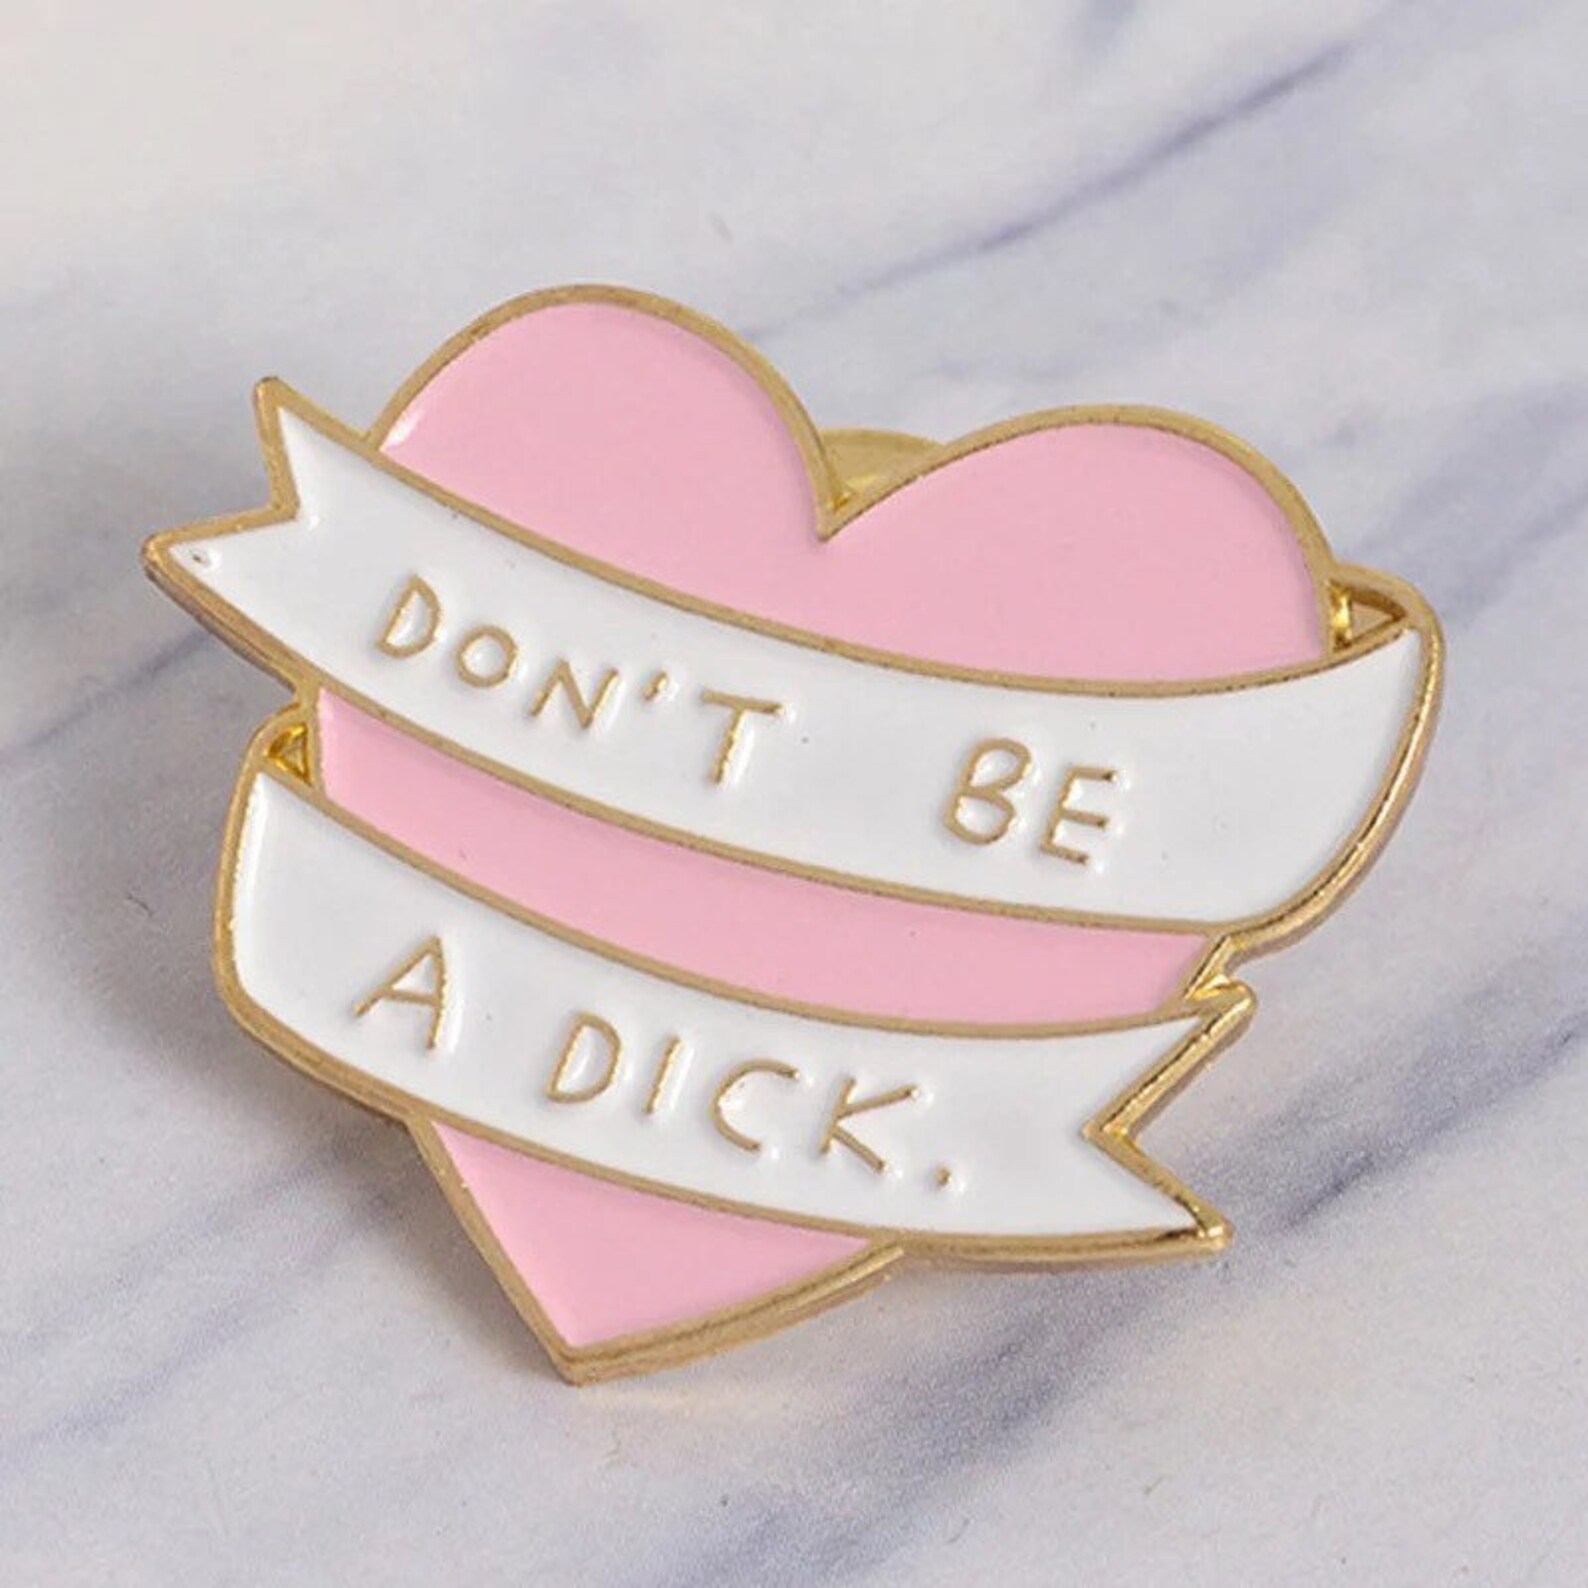 Dont Be A Dick Brooch Enamel Pin Heart Badge Funny Pins Etsy 